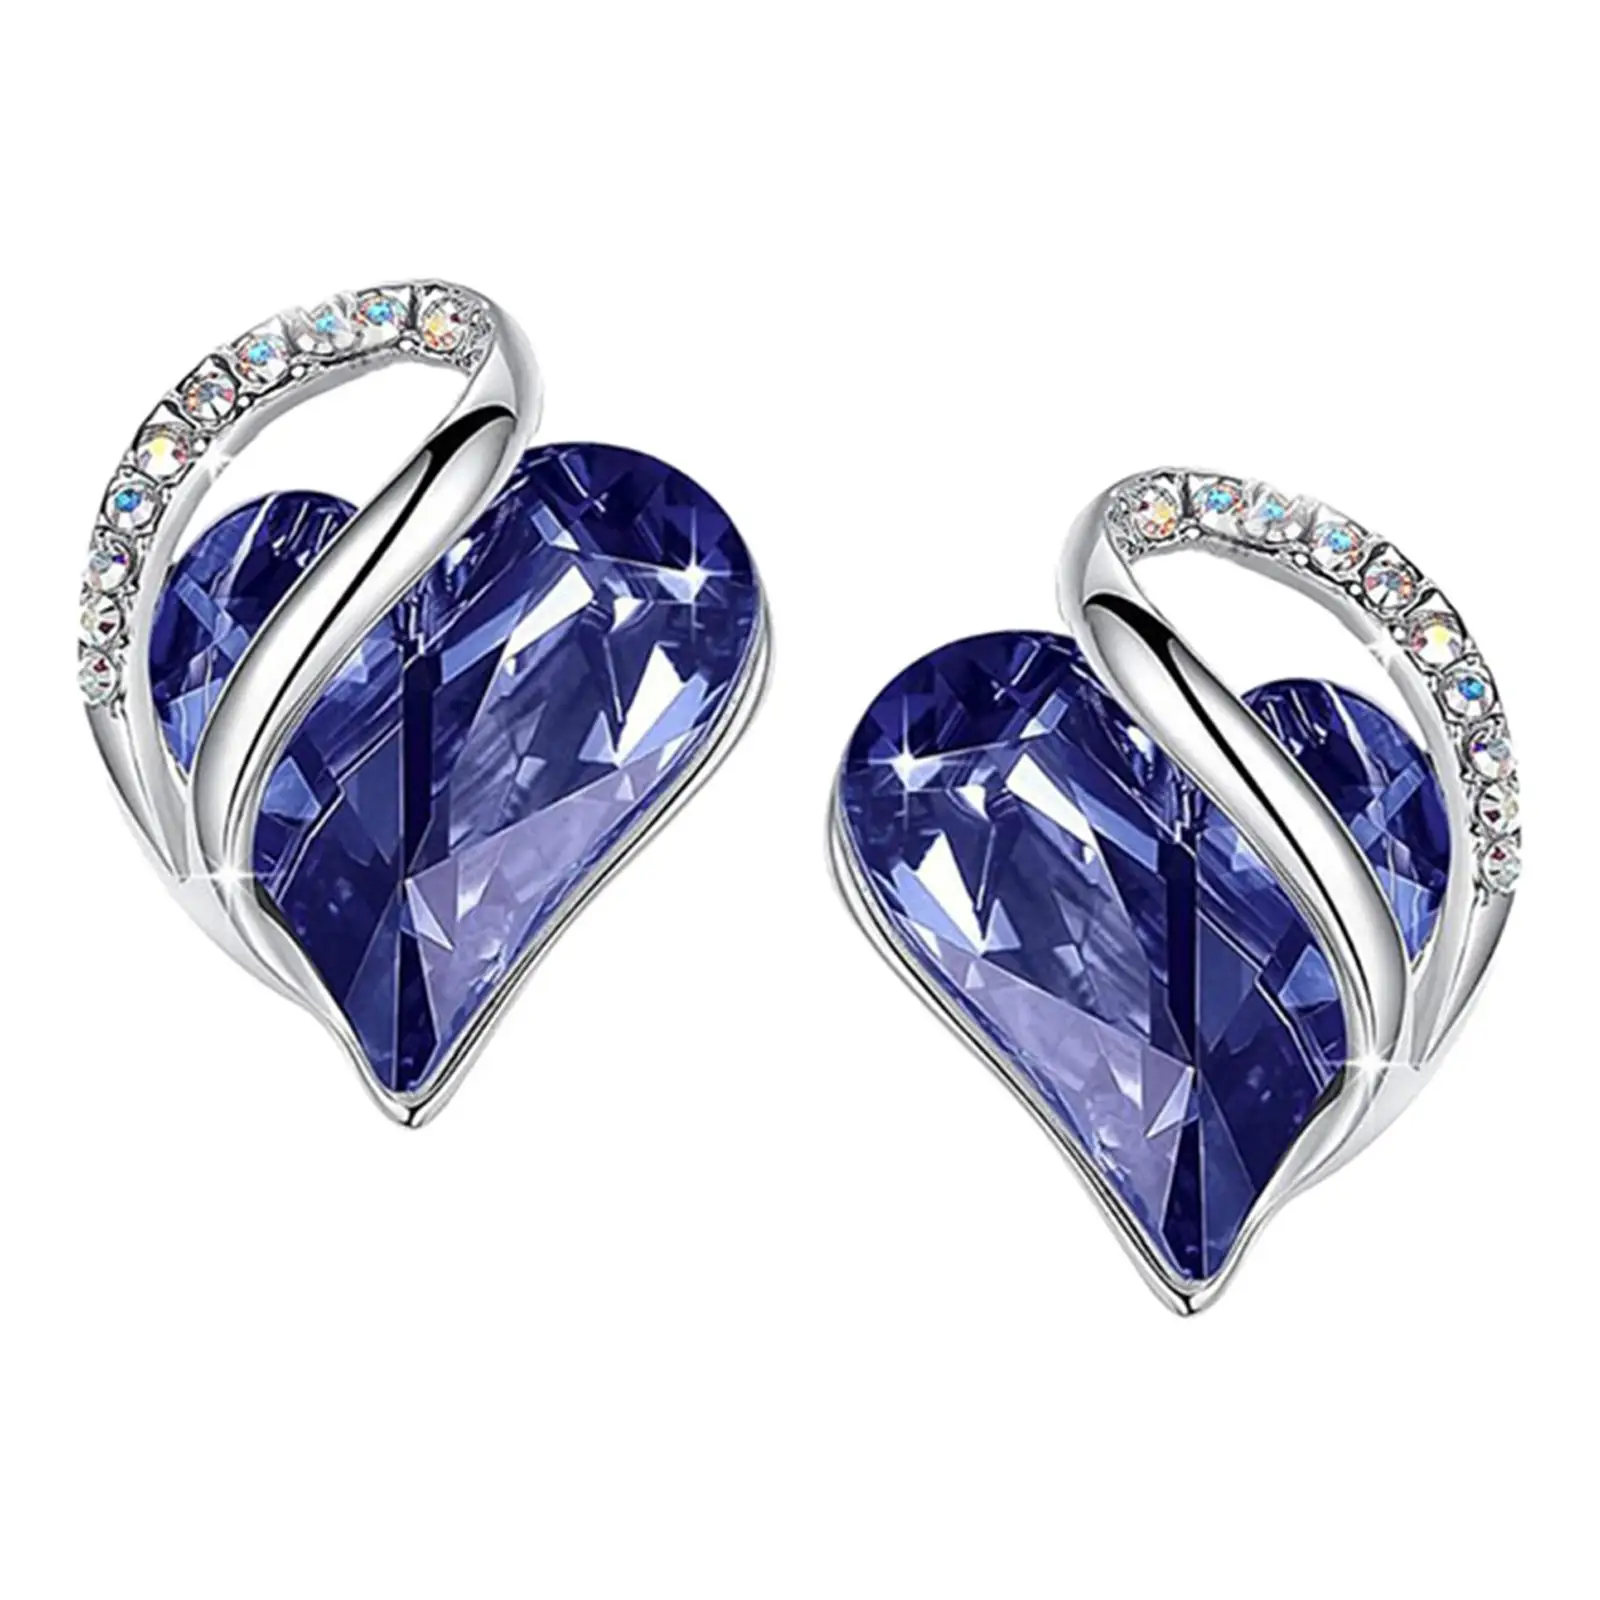 1 Pair Sterling Stud Earrings Fashion Rhinestones Jewelry for Wedding Birthday Women